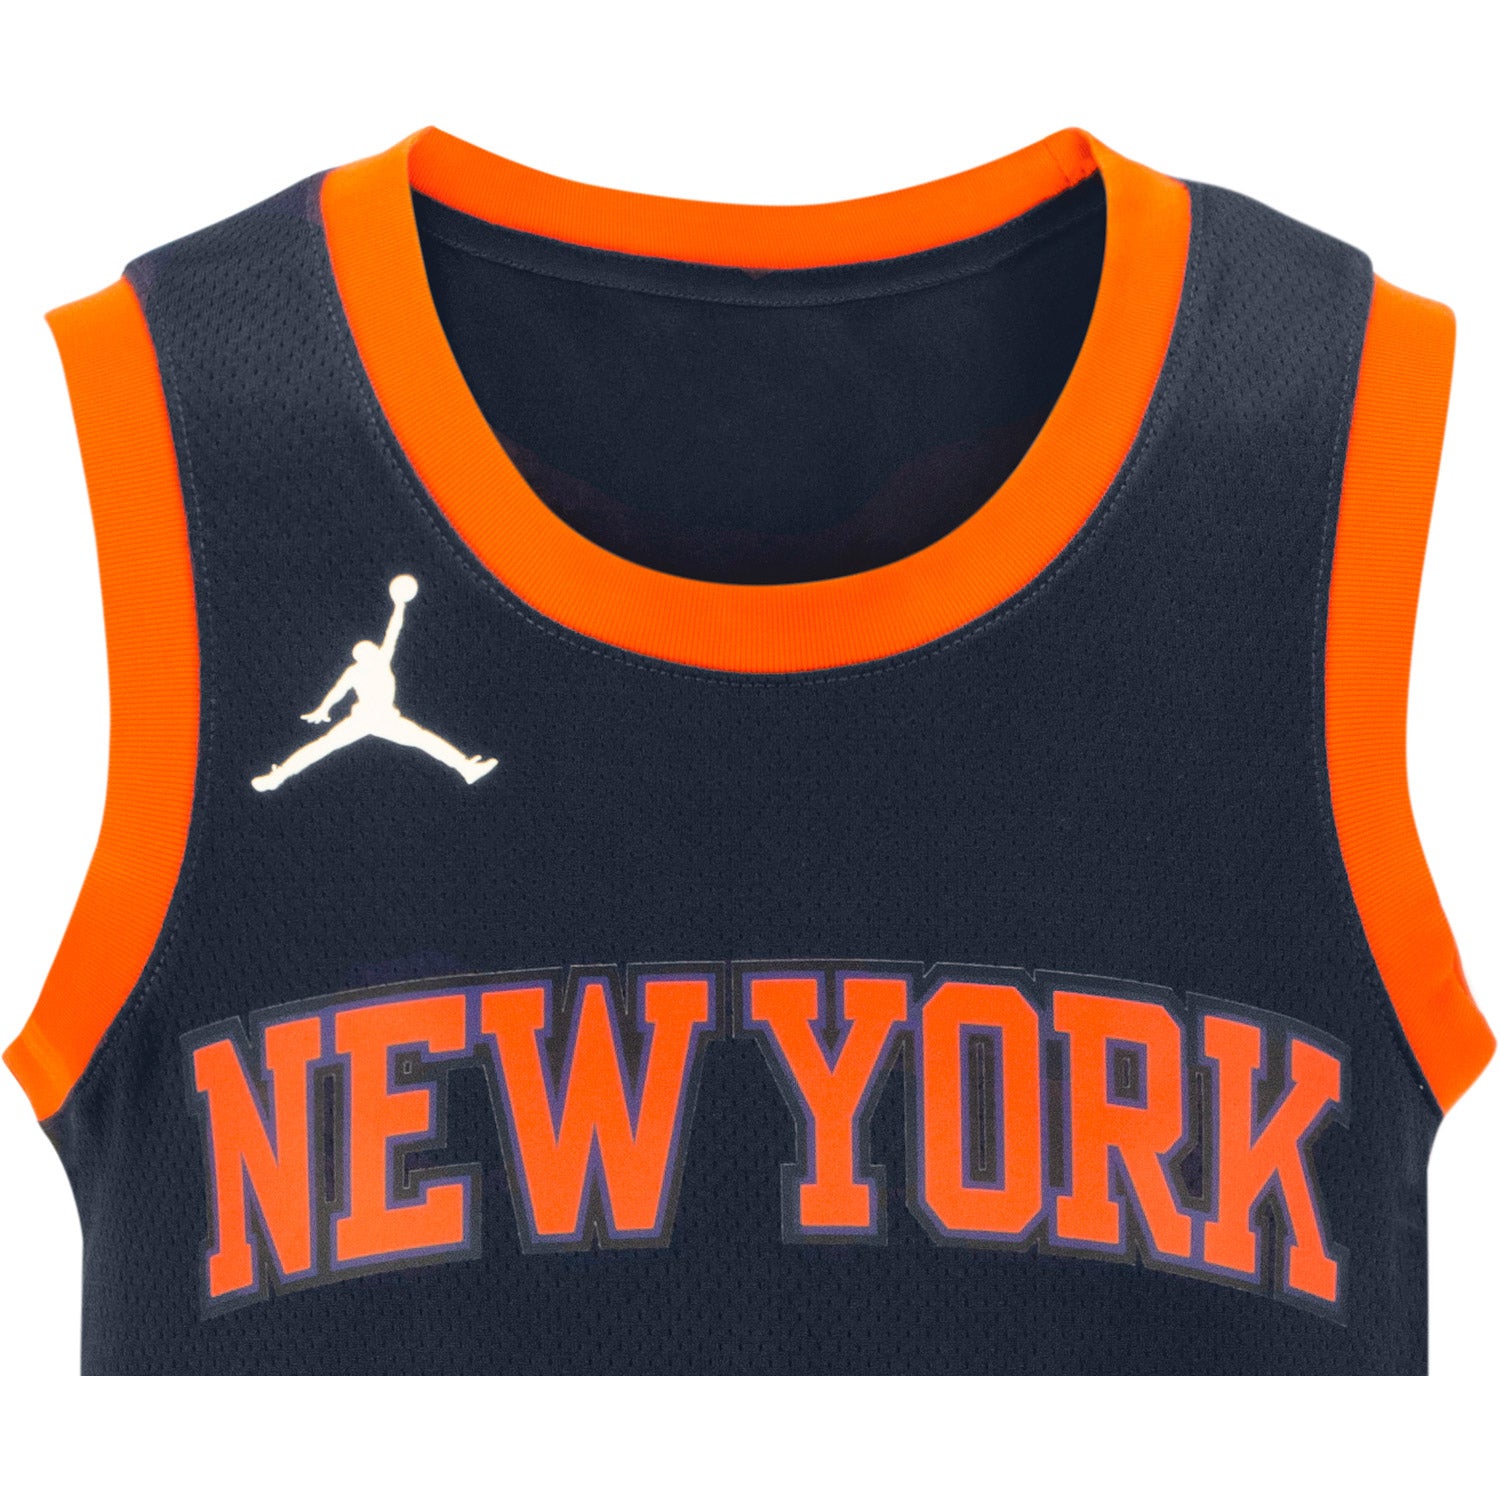 New York Knicks Nike Association Swingman Jersey - Custom - Youth